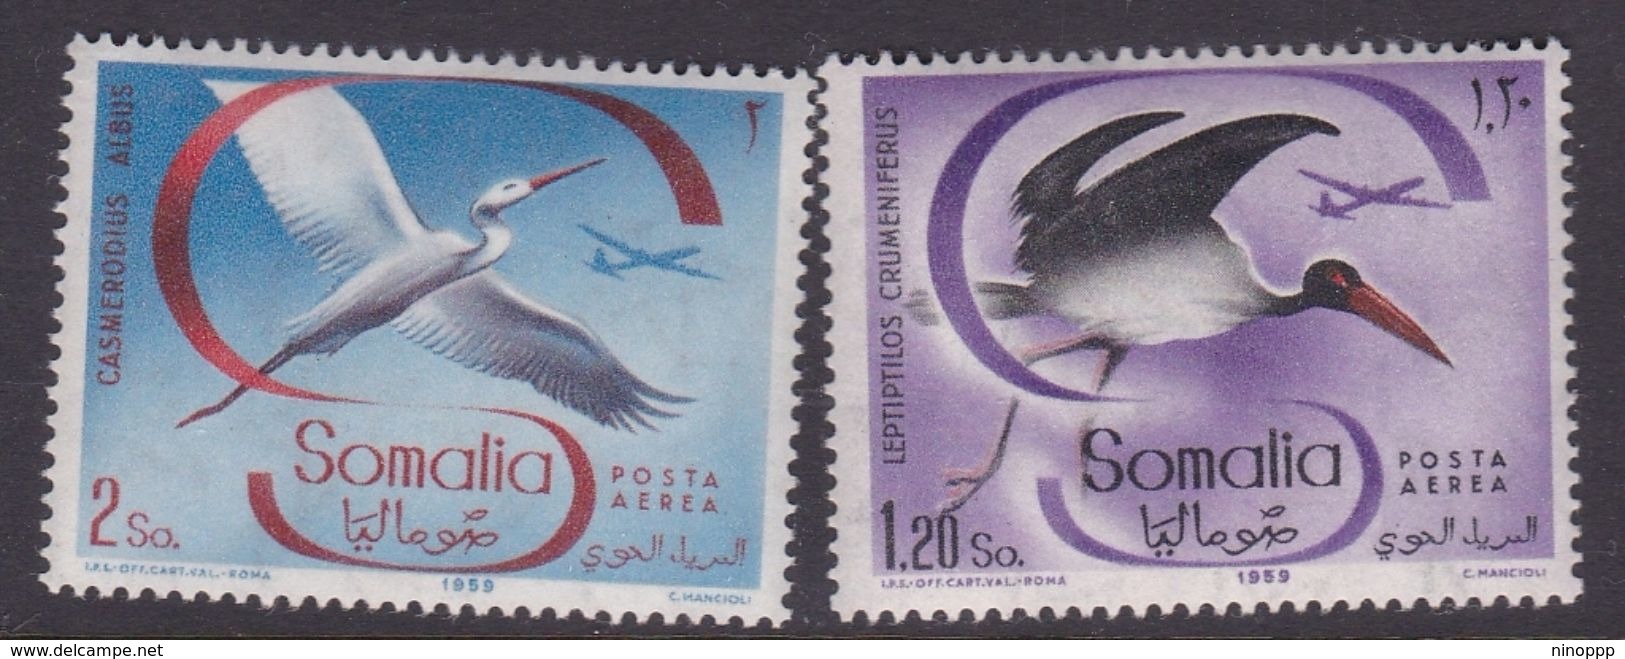 Somalia Scott C59-60 1959 Birds, Mint Never Hinged - Somalia (AFIS)